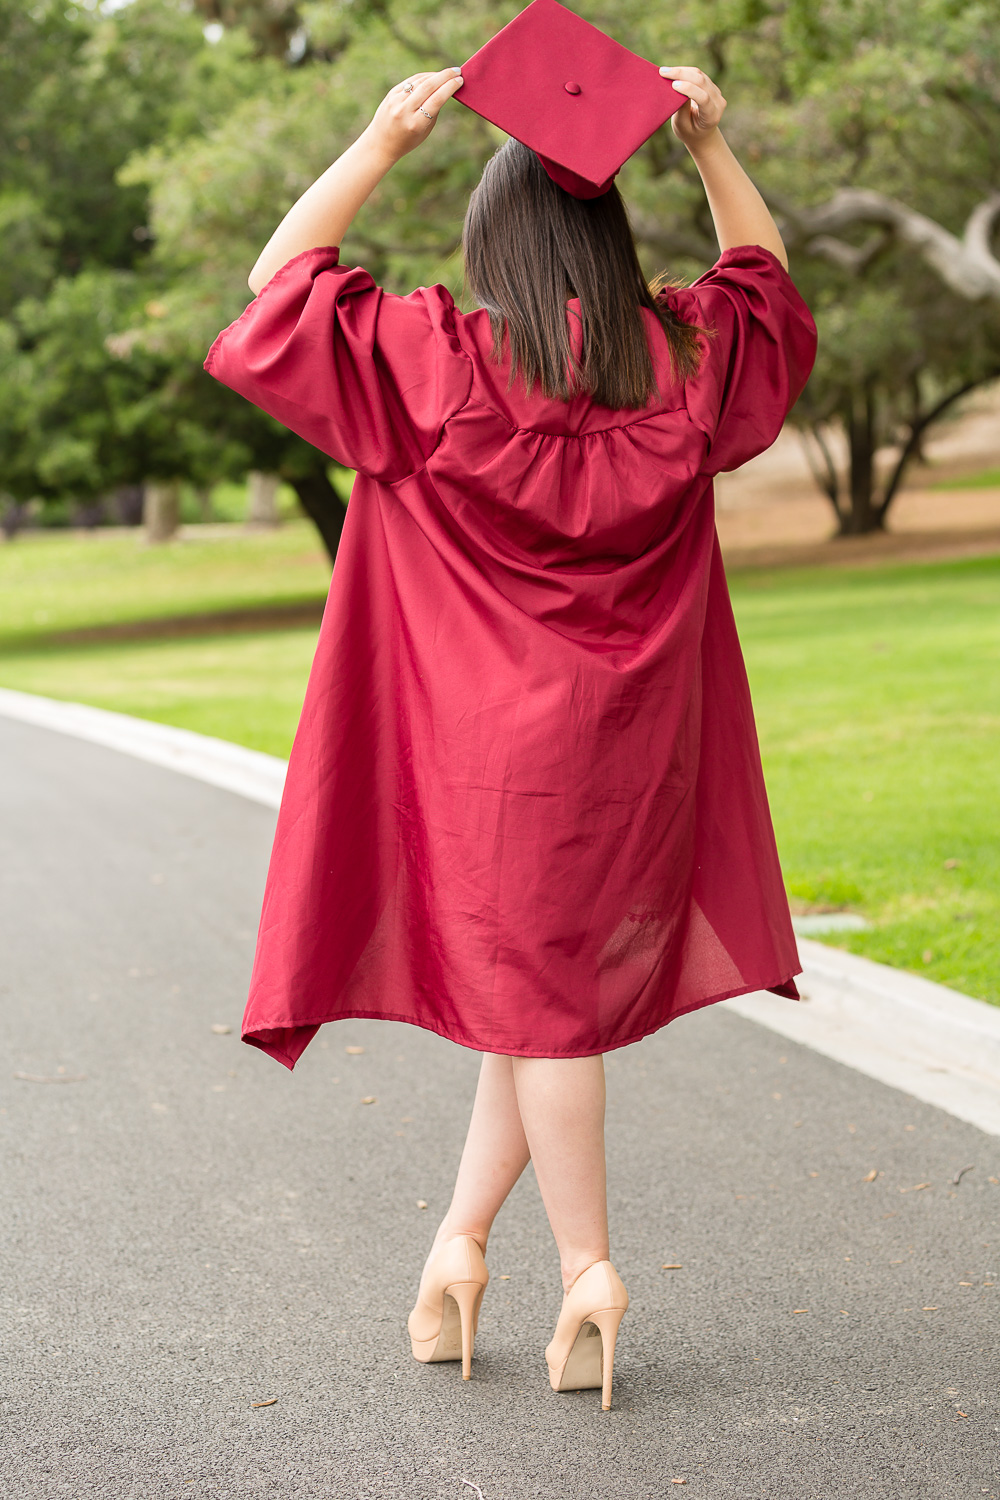 Senior graduate in cap and gown.jpg